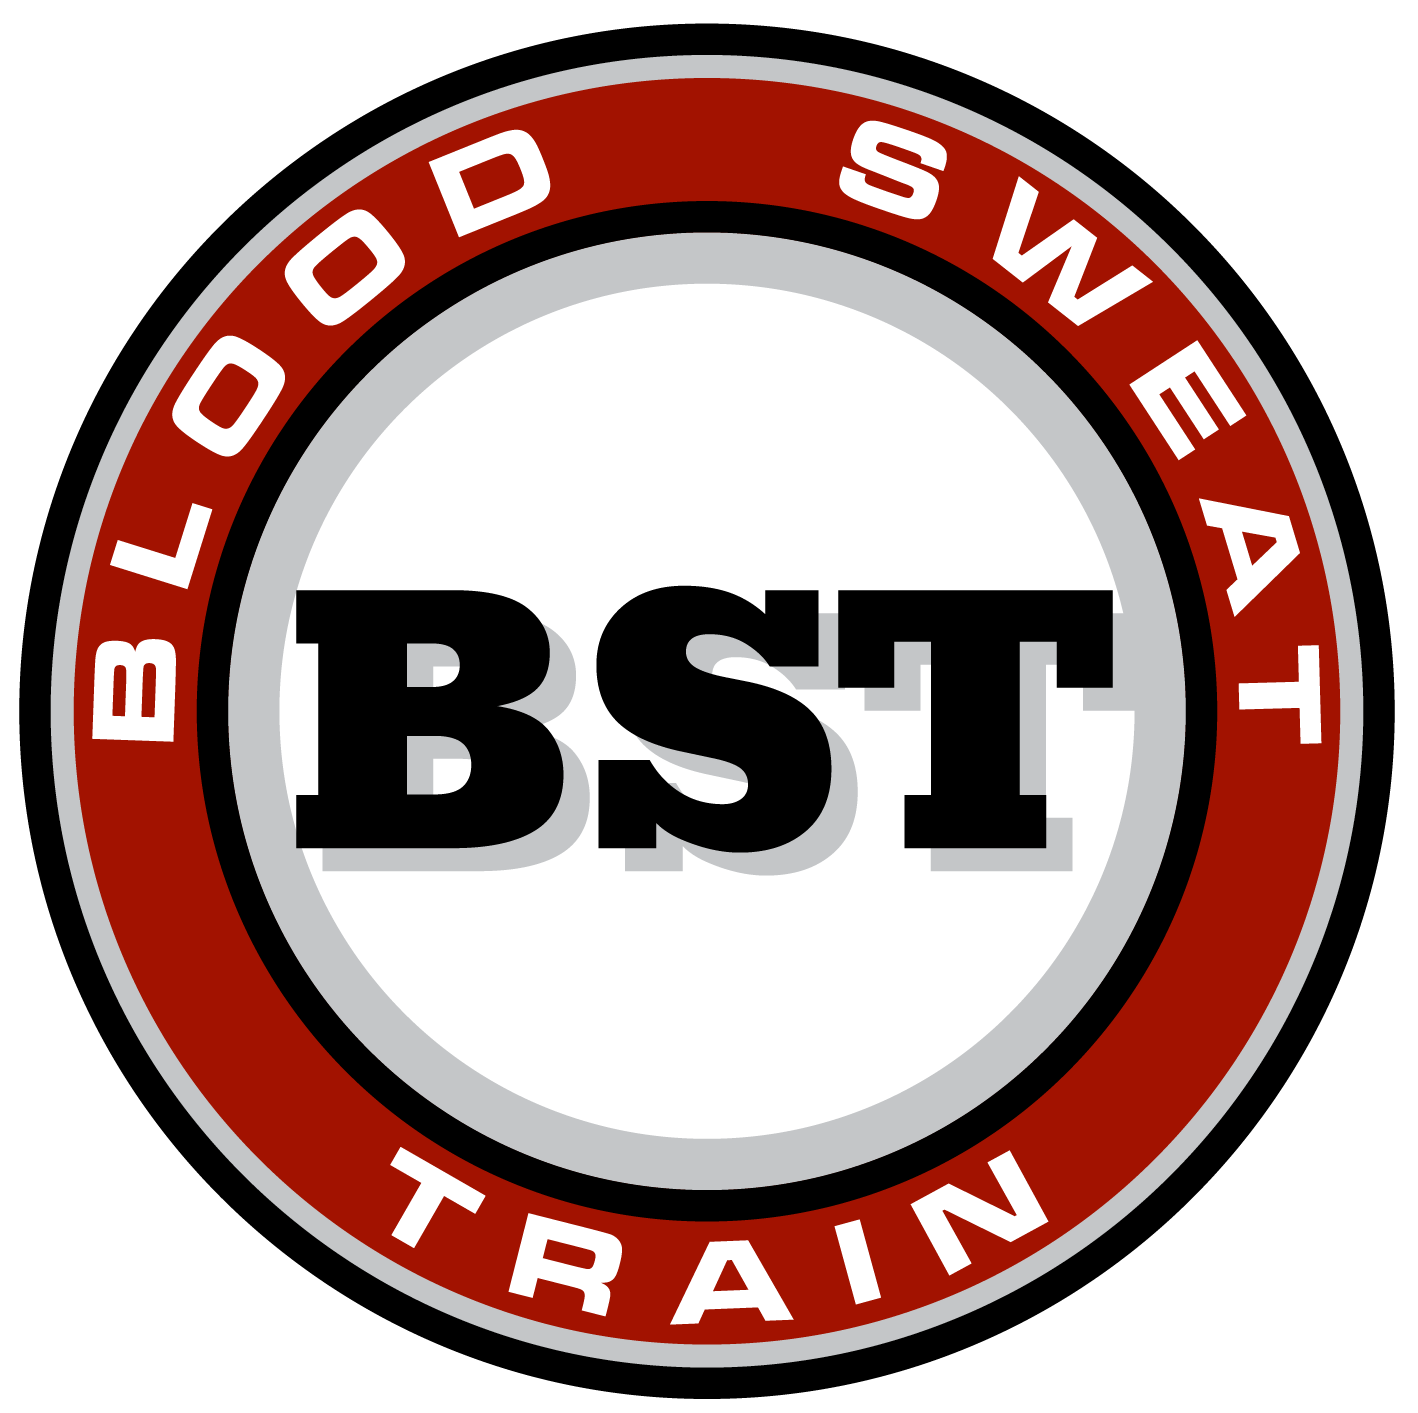 Blood Sweat Train